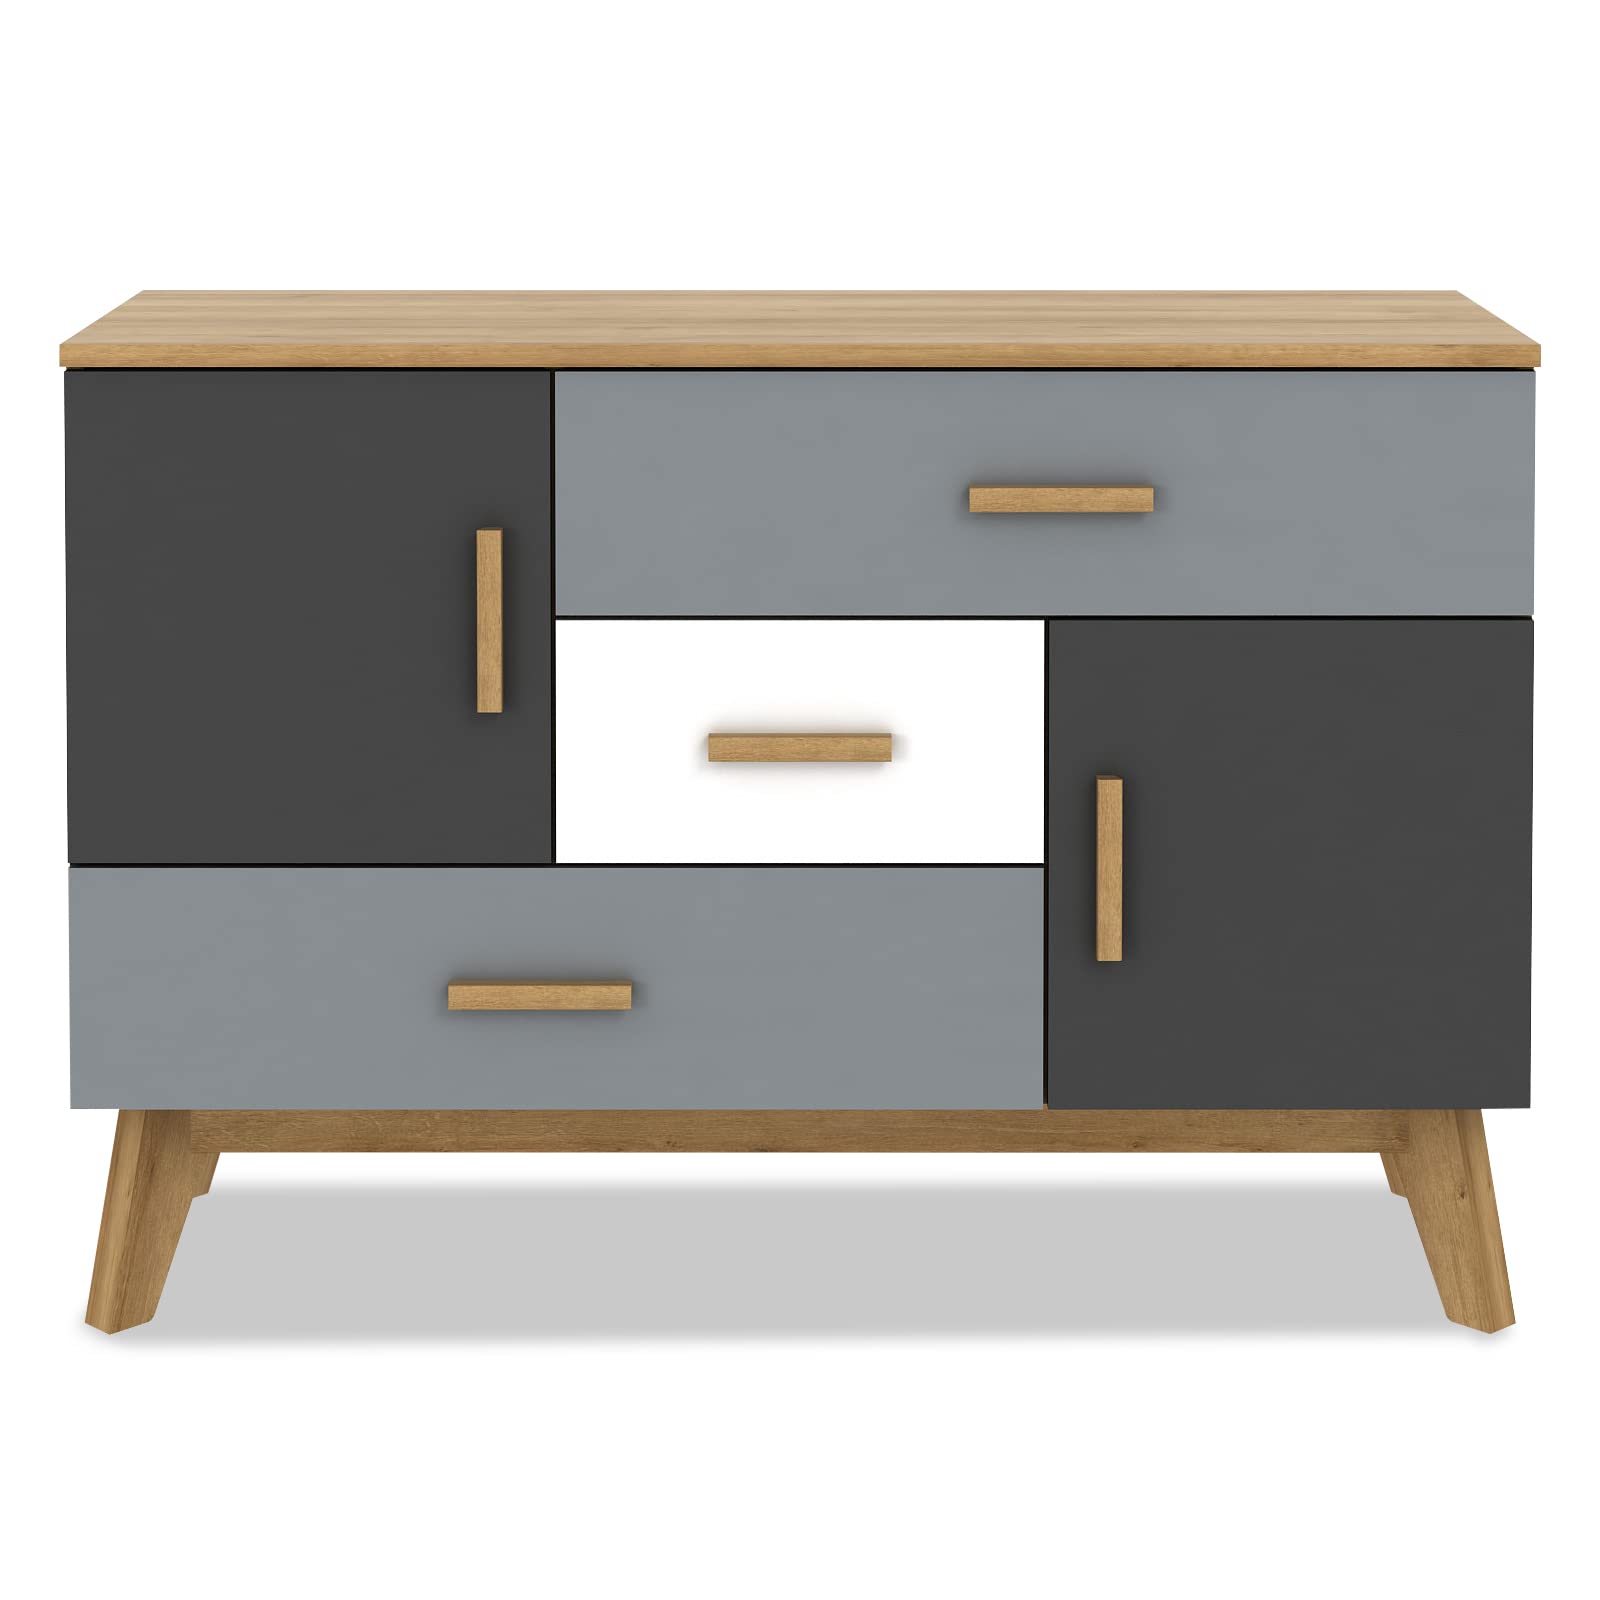 Free-Standing Storage Cabinet, Floor Cabinet with 2 Doors & 3 Drawers